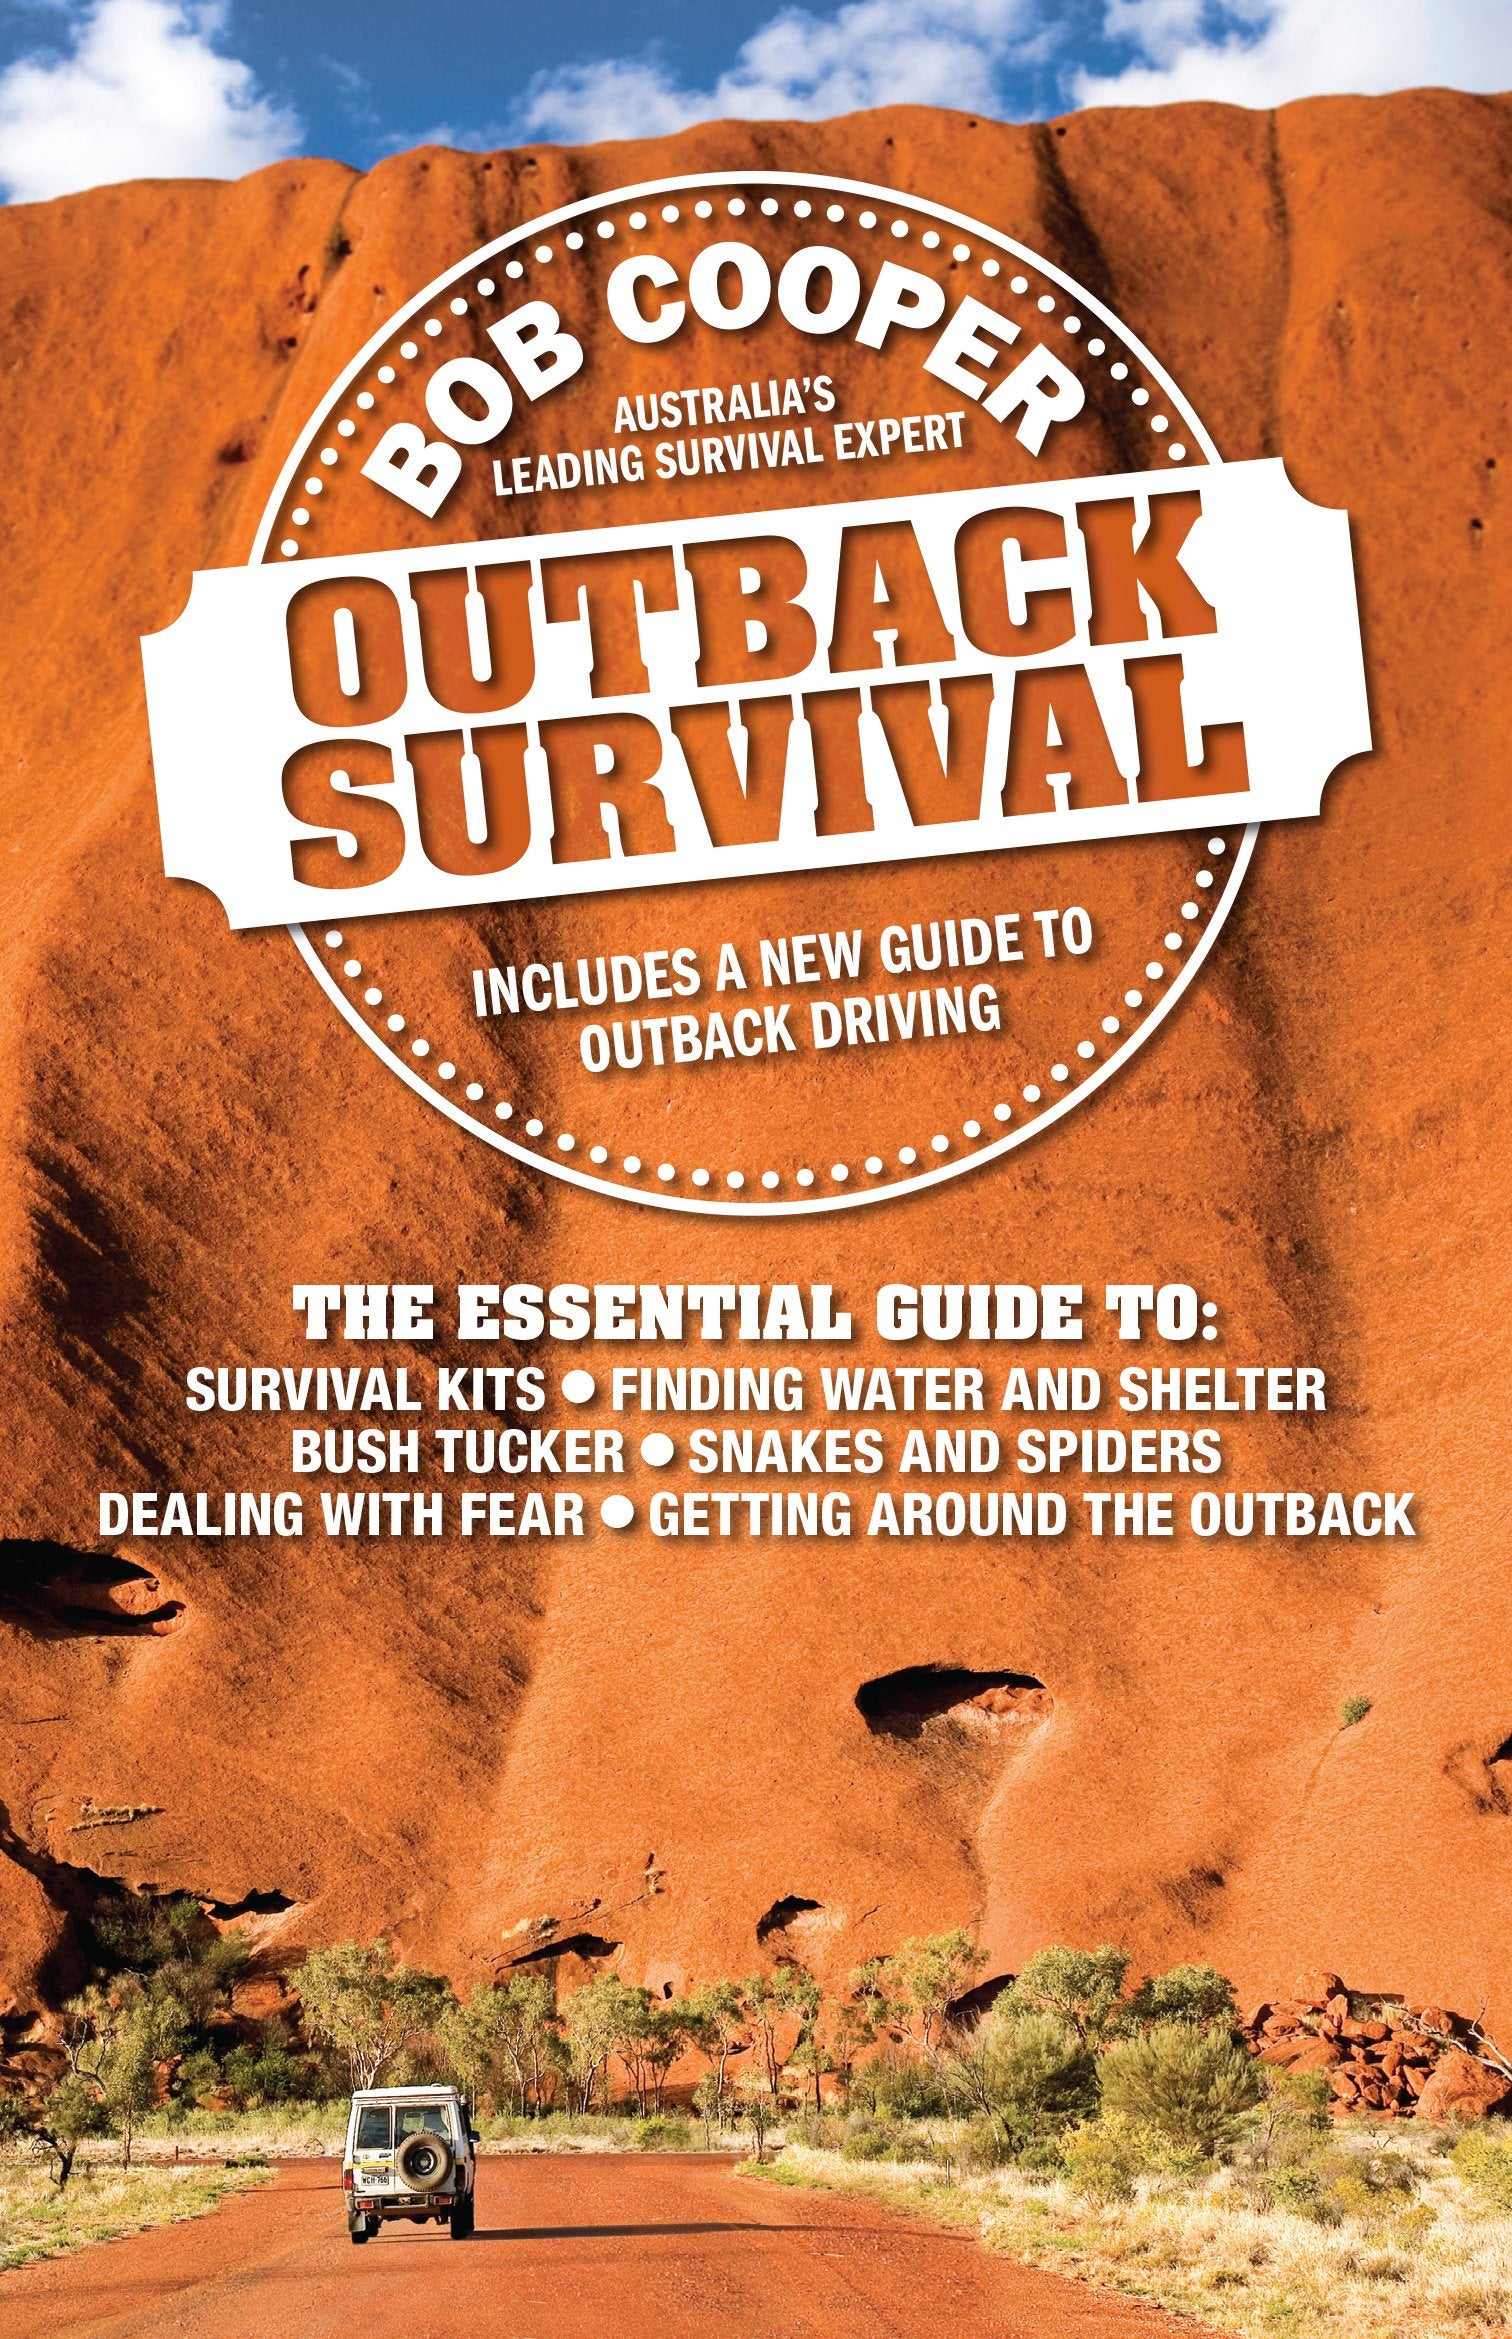 BOB COOPER Outback Survival Book